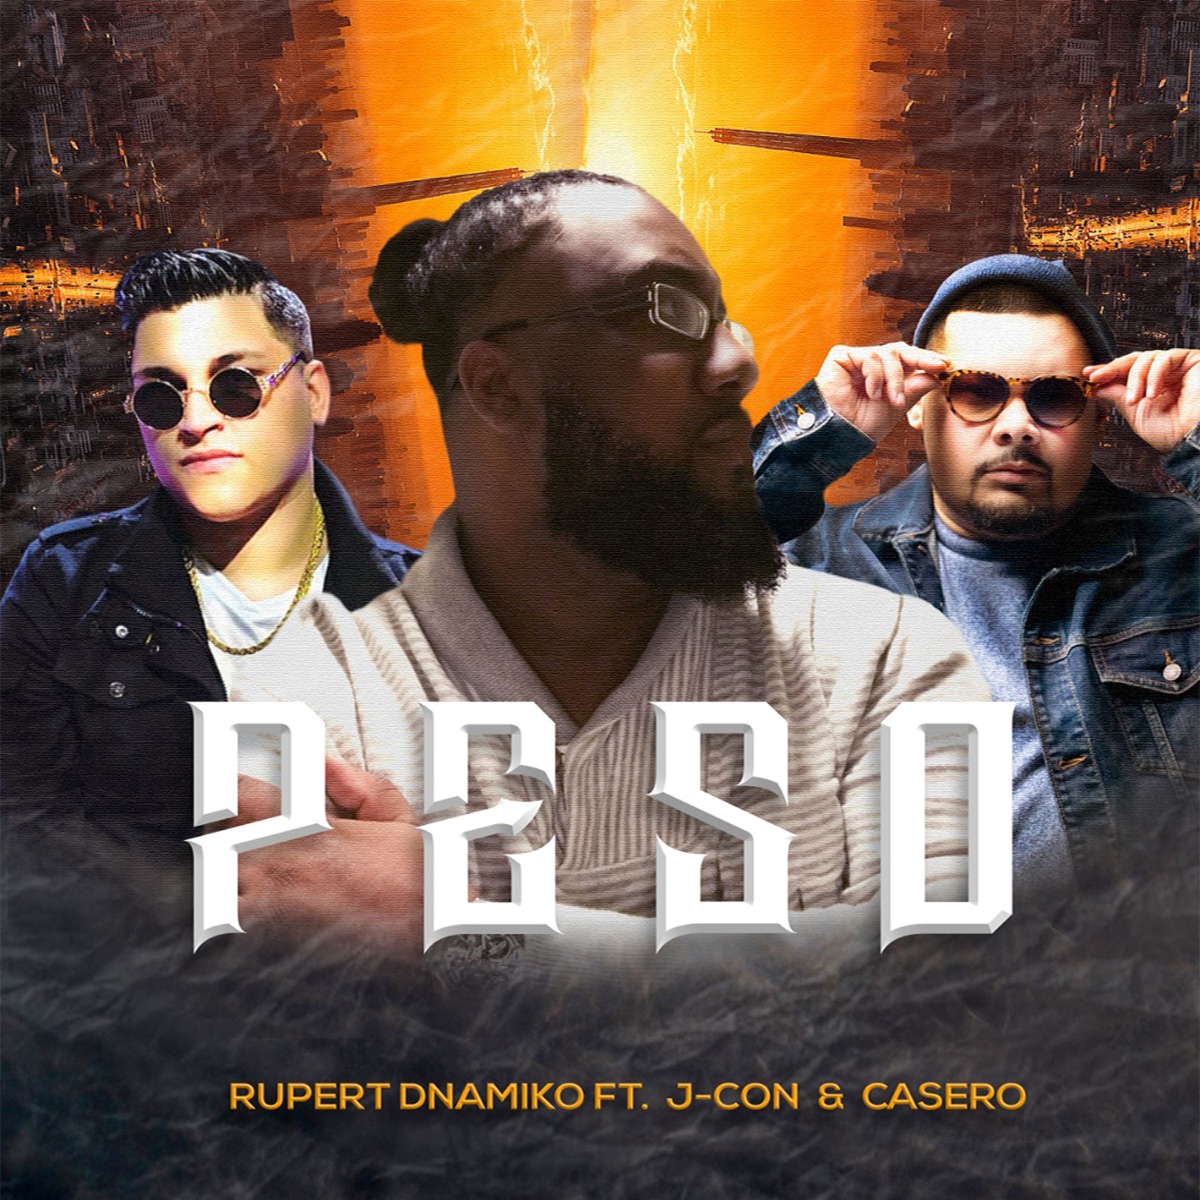 Peso (feat. J-Con & Casero) - Single - Album by Rupert Dnamiko - Apple Music